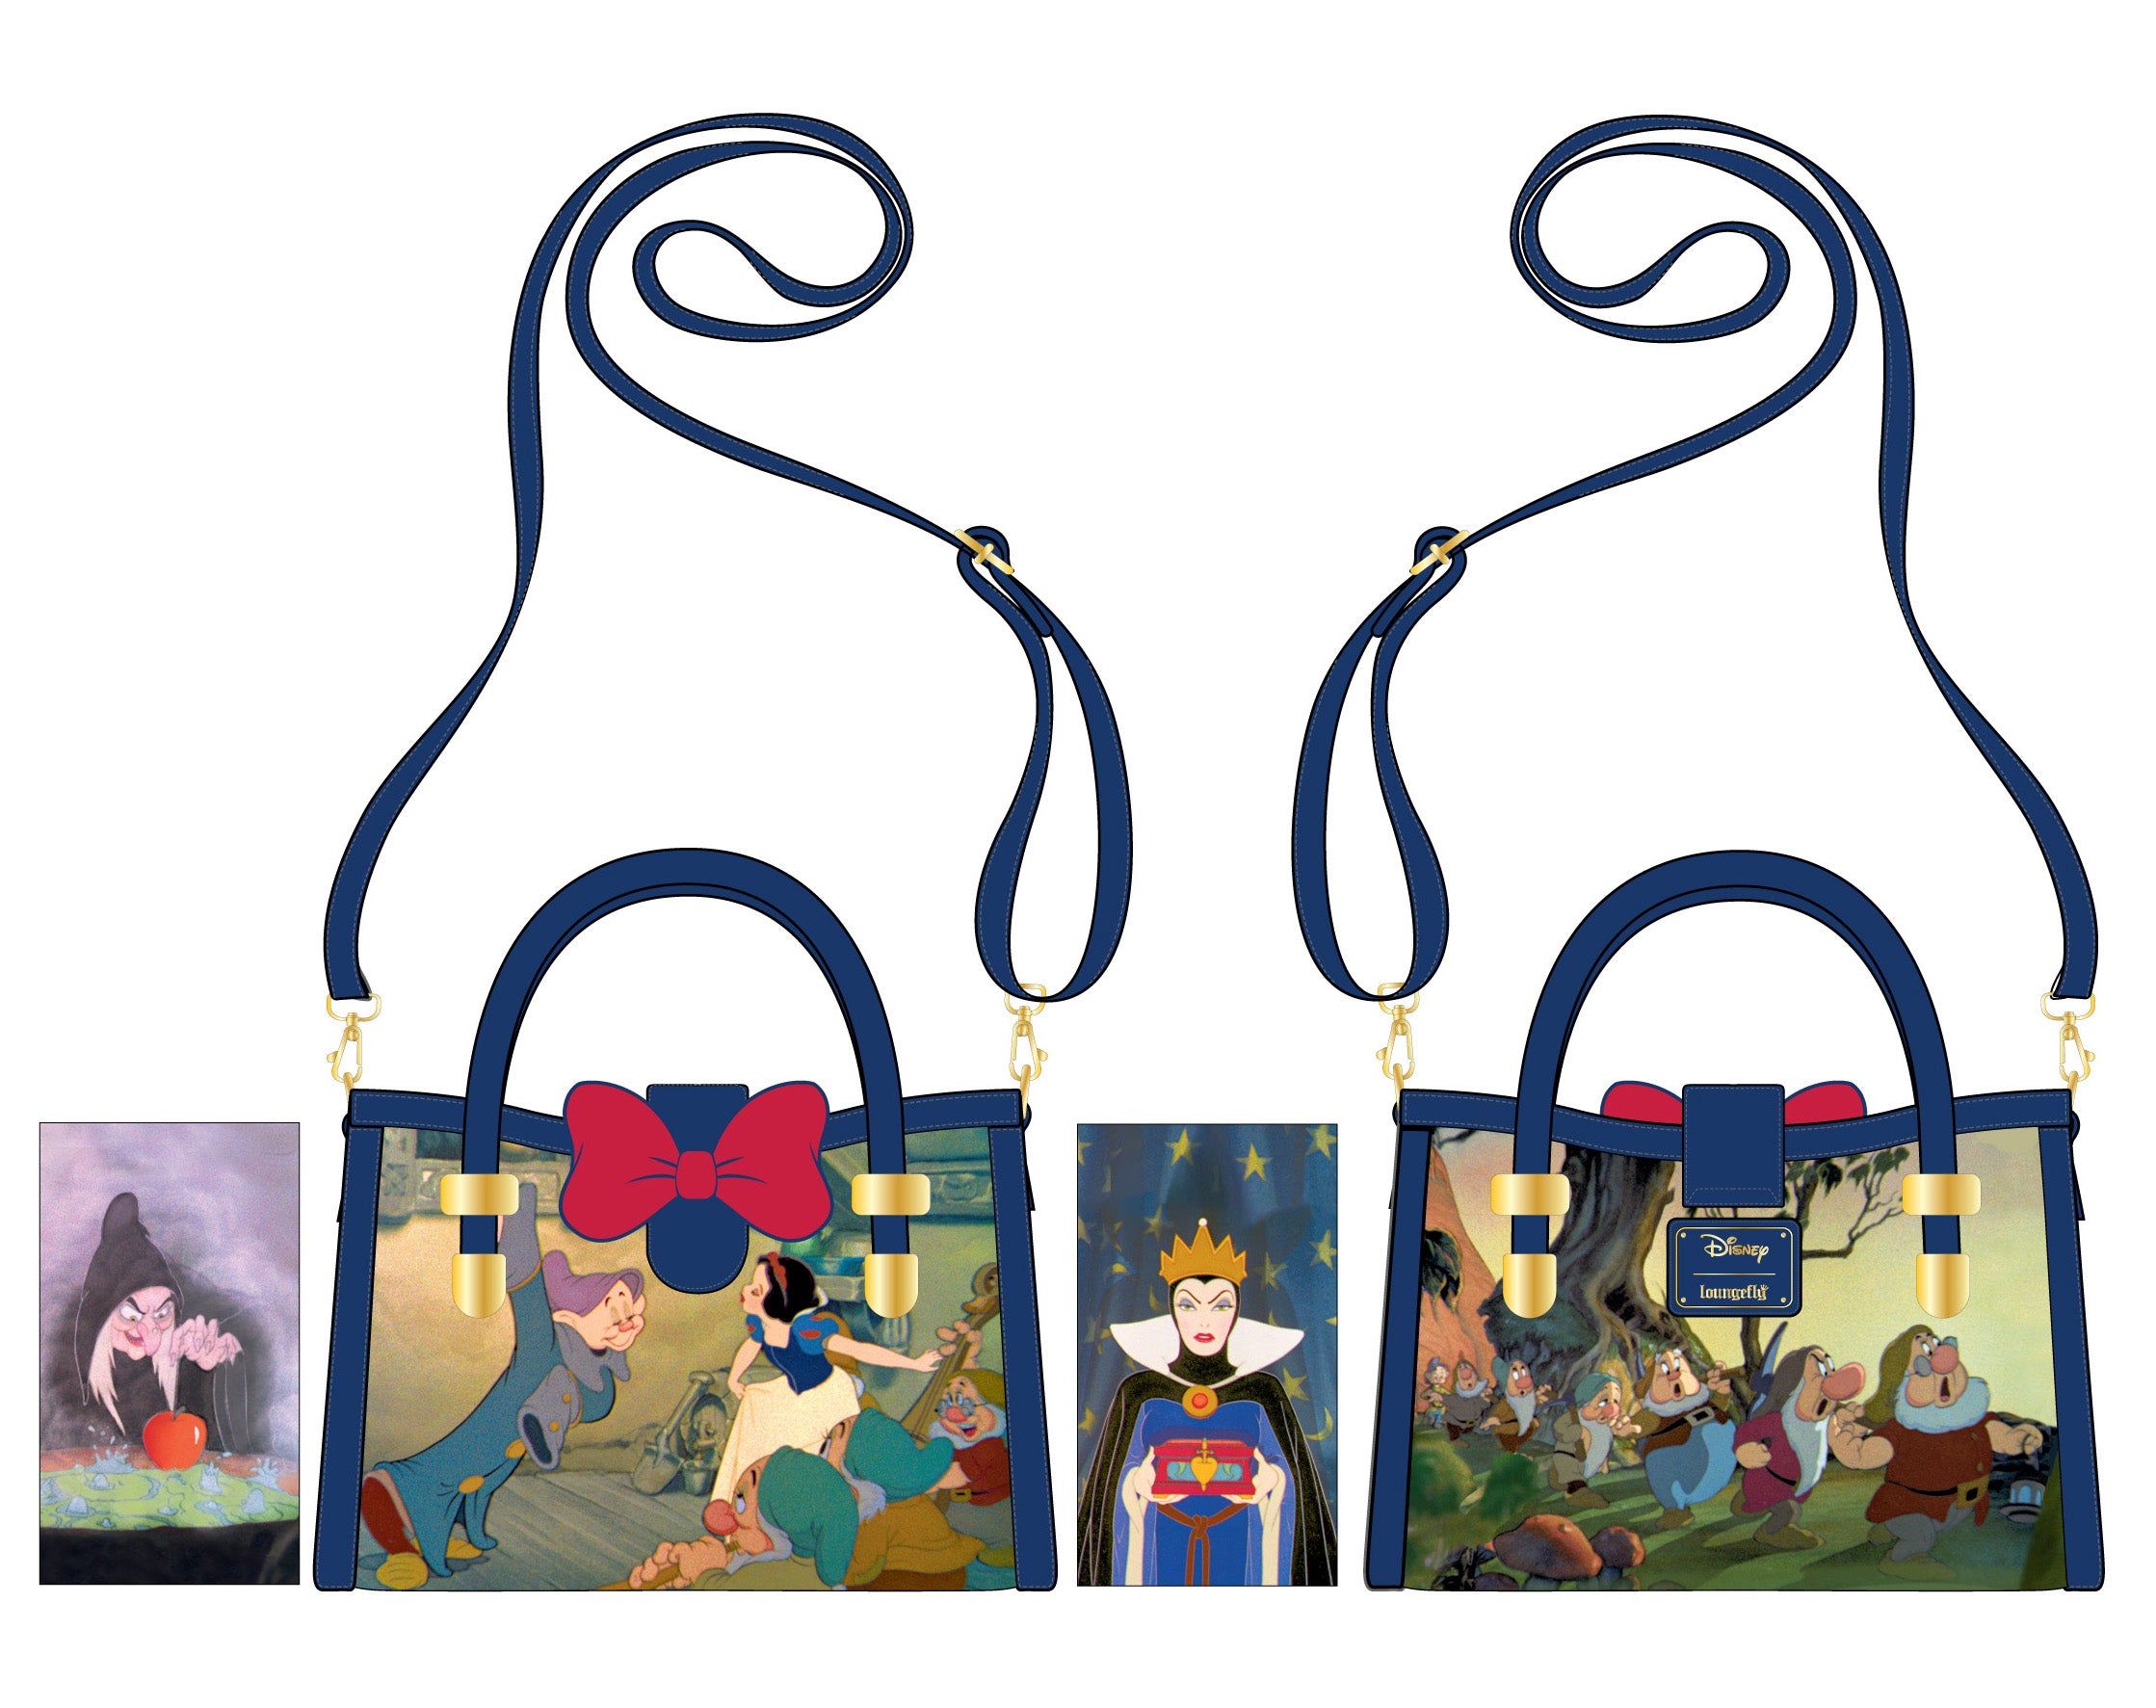 Loungefly Disney Snow White Castle Series Crossbody Bag